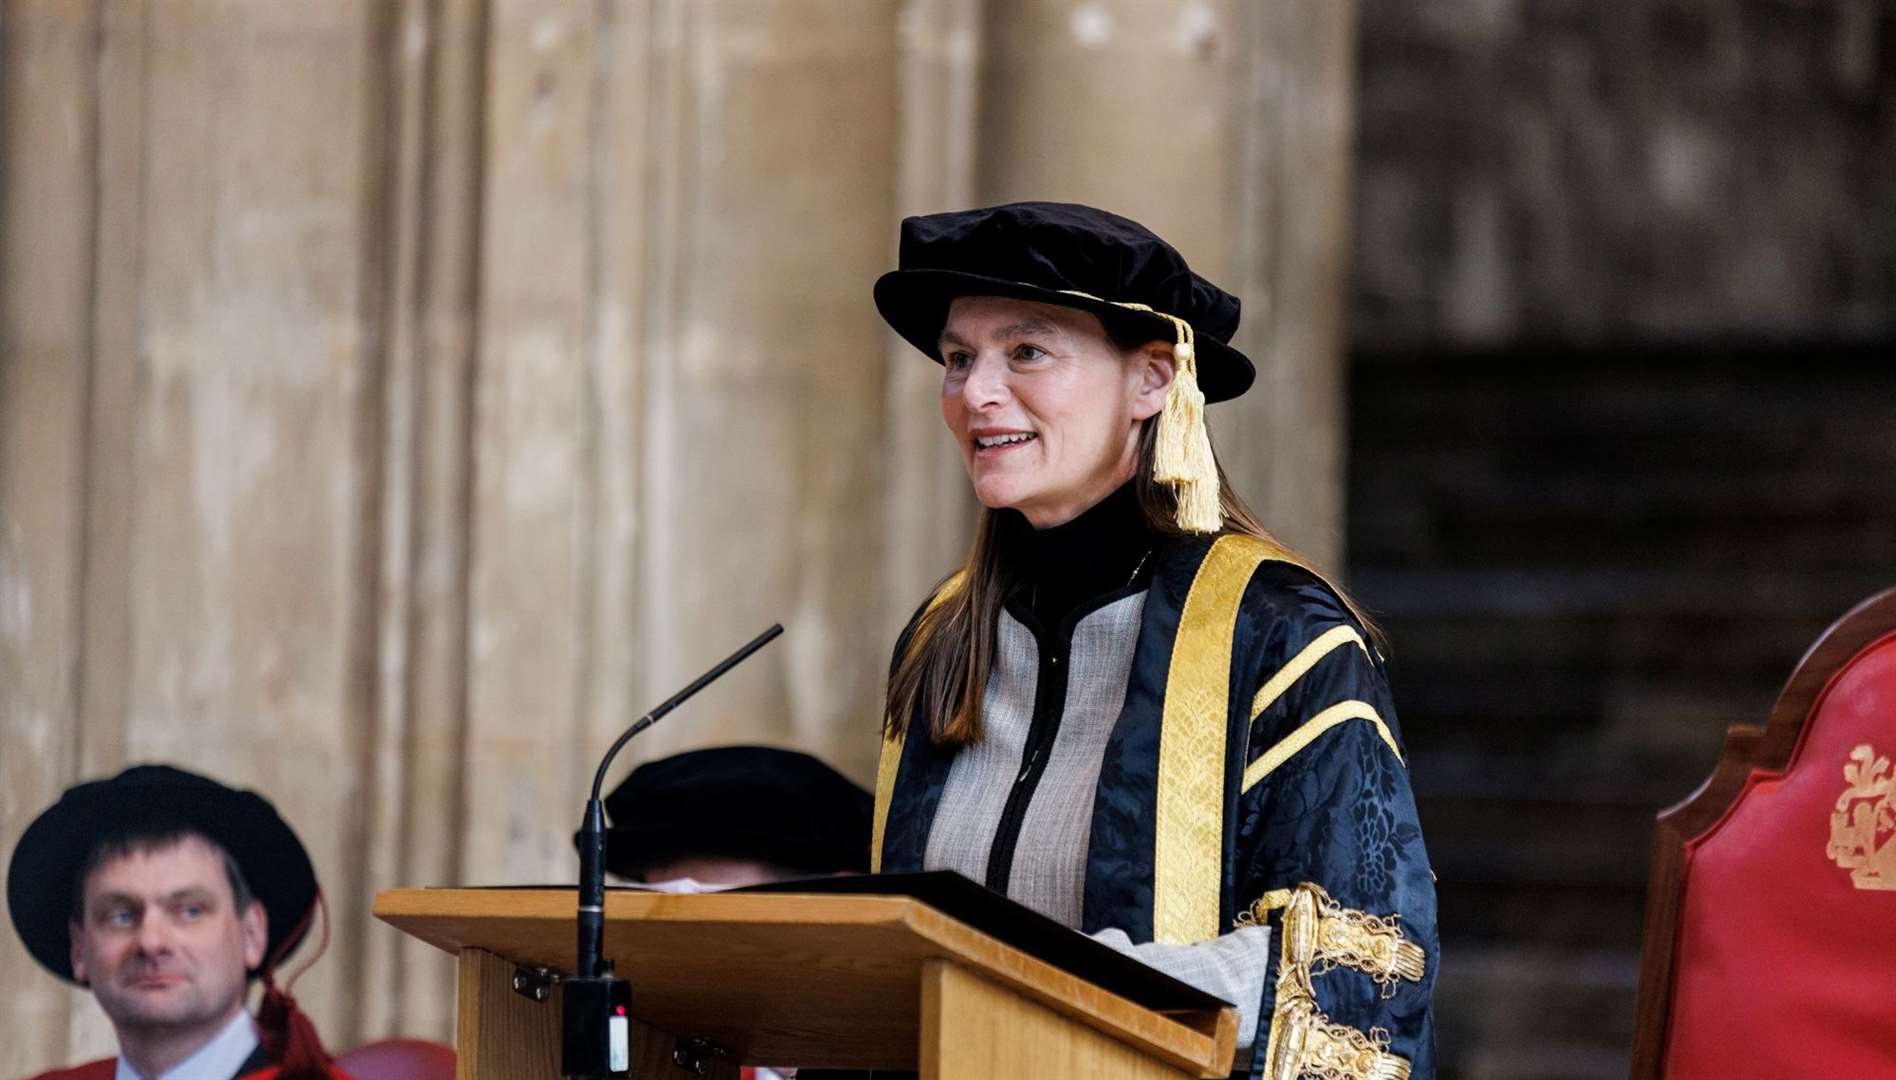 University of Kent vice-chancellor Professor Karen Cox resigned in April